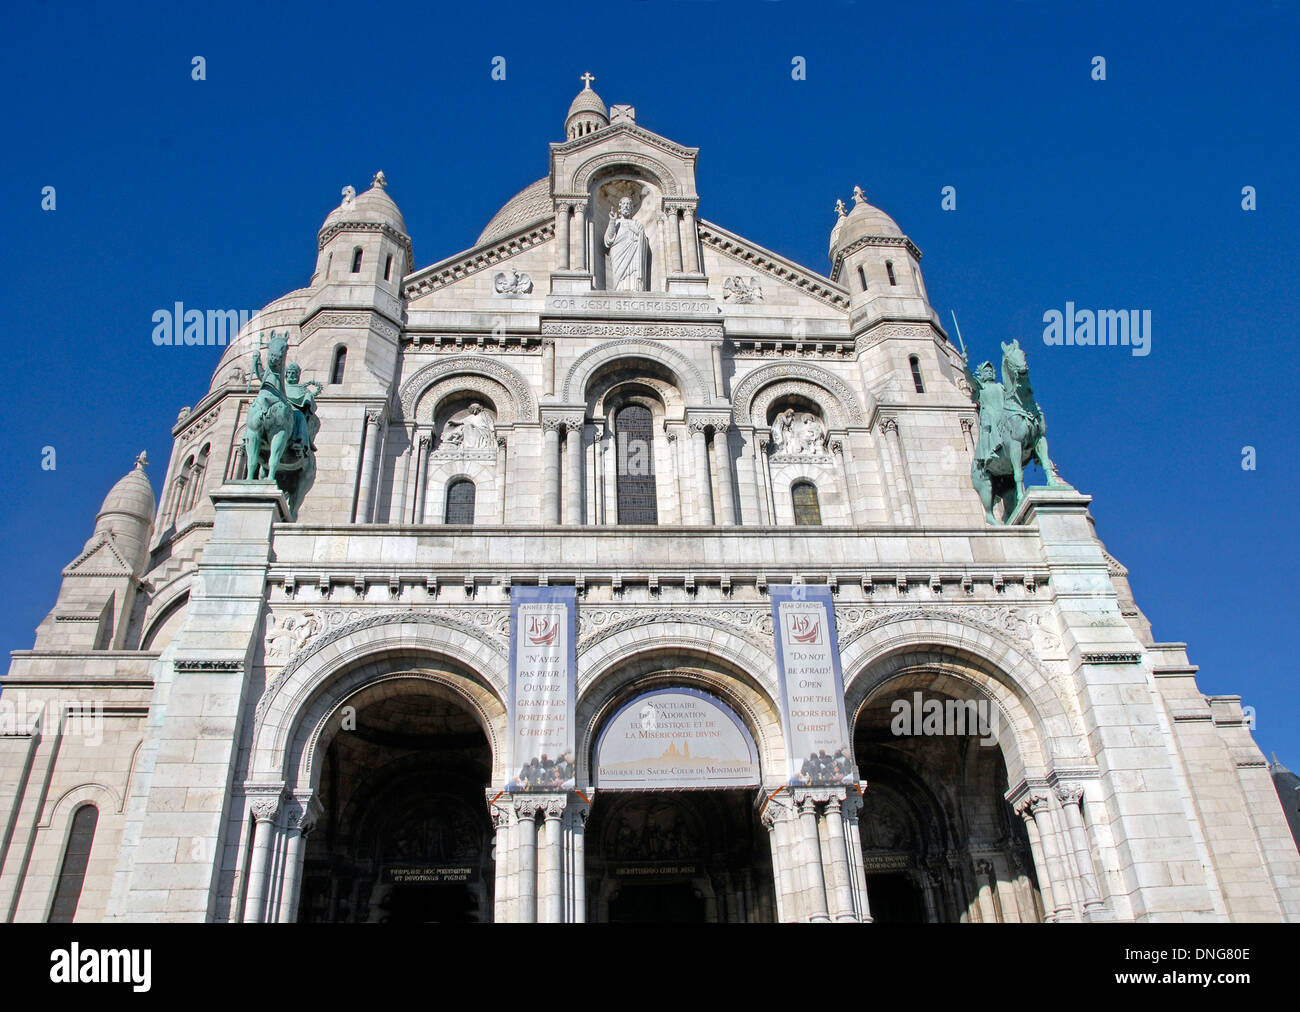 Facade of the Sacre Coeur basilica, Paris, France, against cloudless blue sky Stock Photo